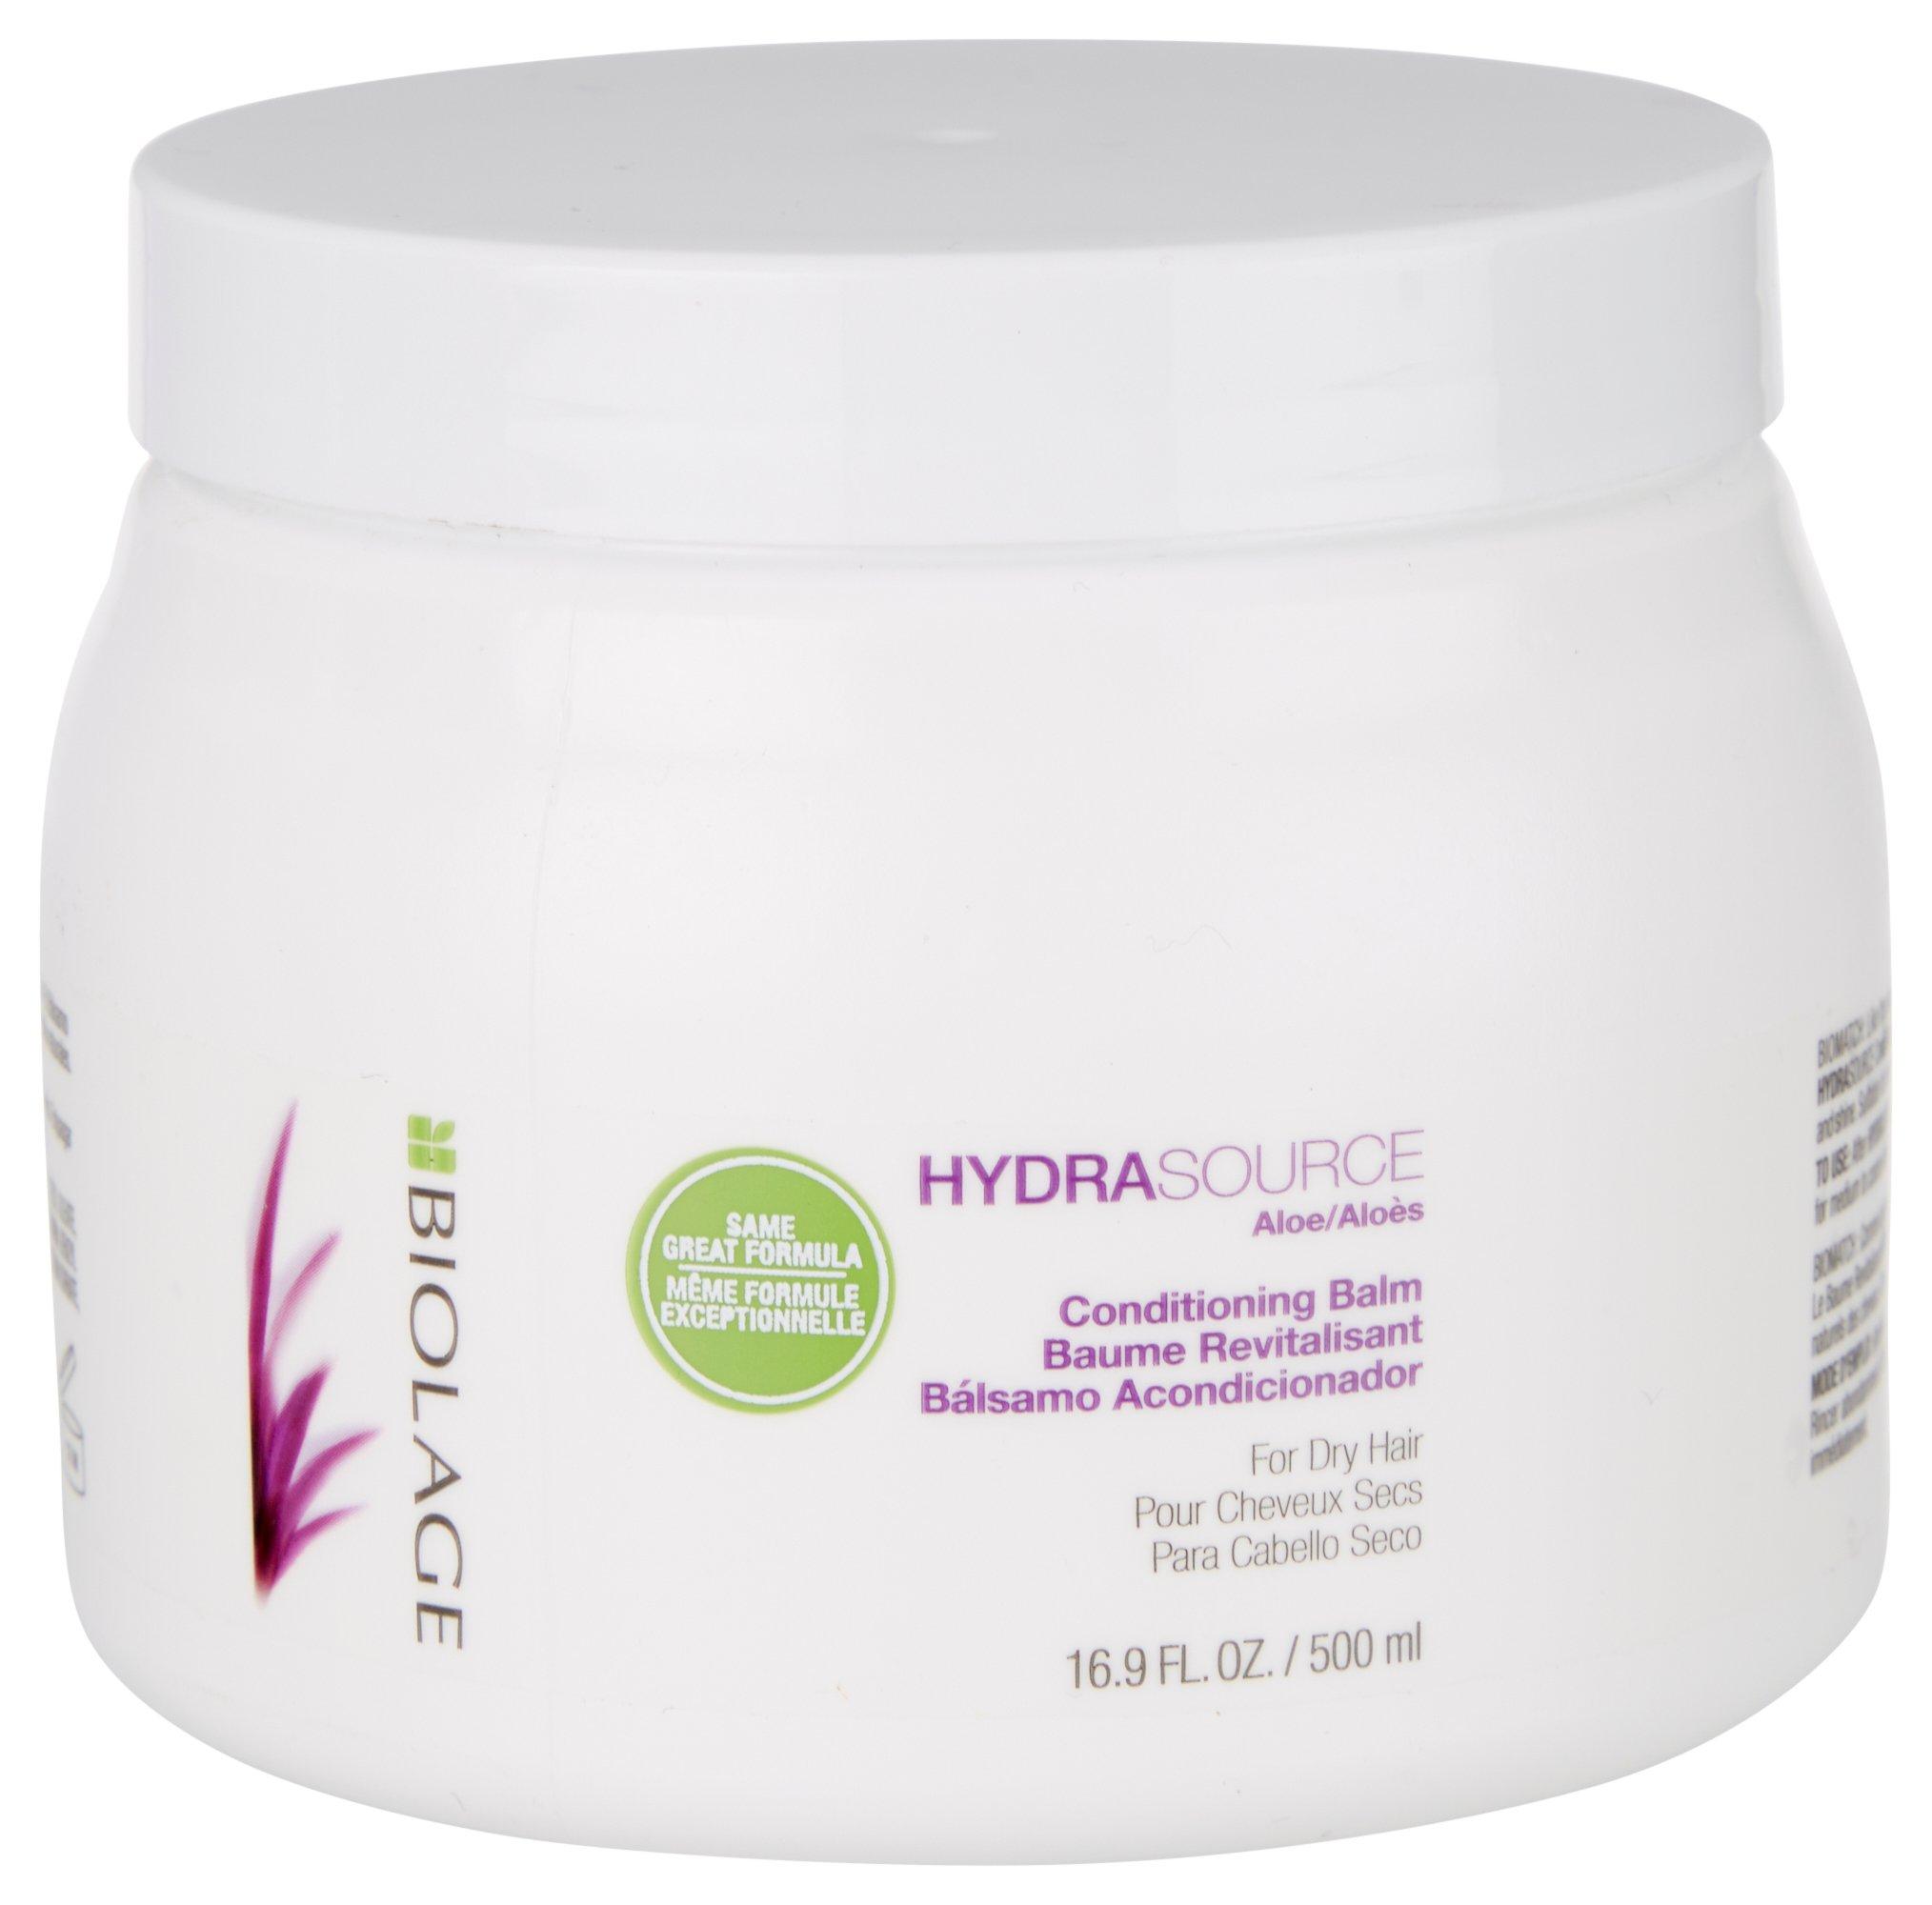 Biolage HydraSource 16.9 Fl.Oz. Dry Hair Conditioning Balm